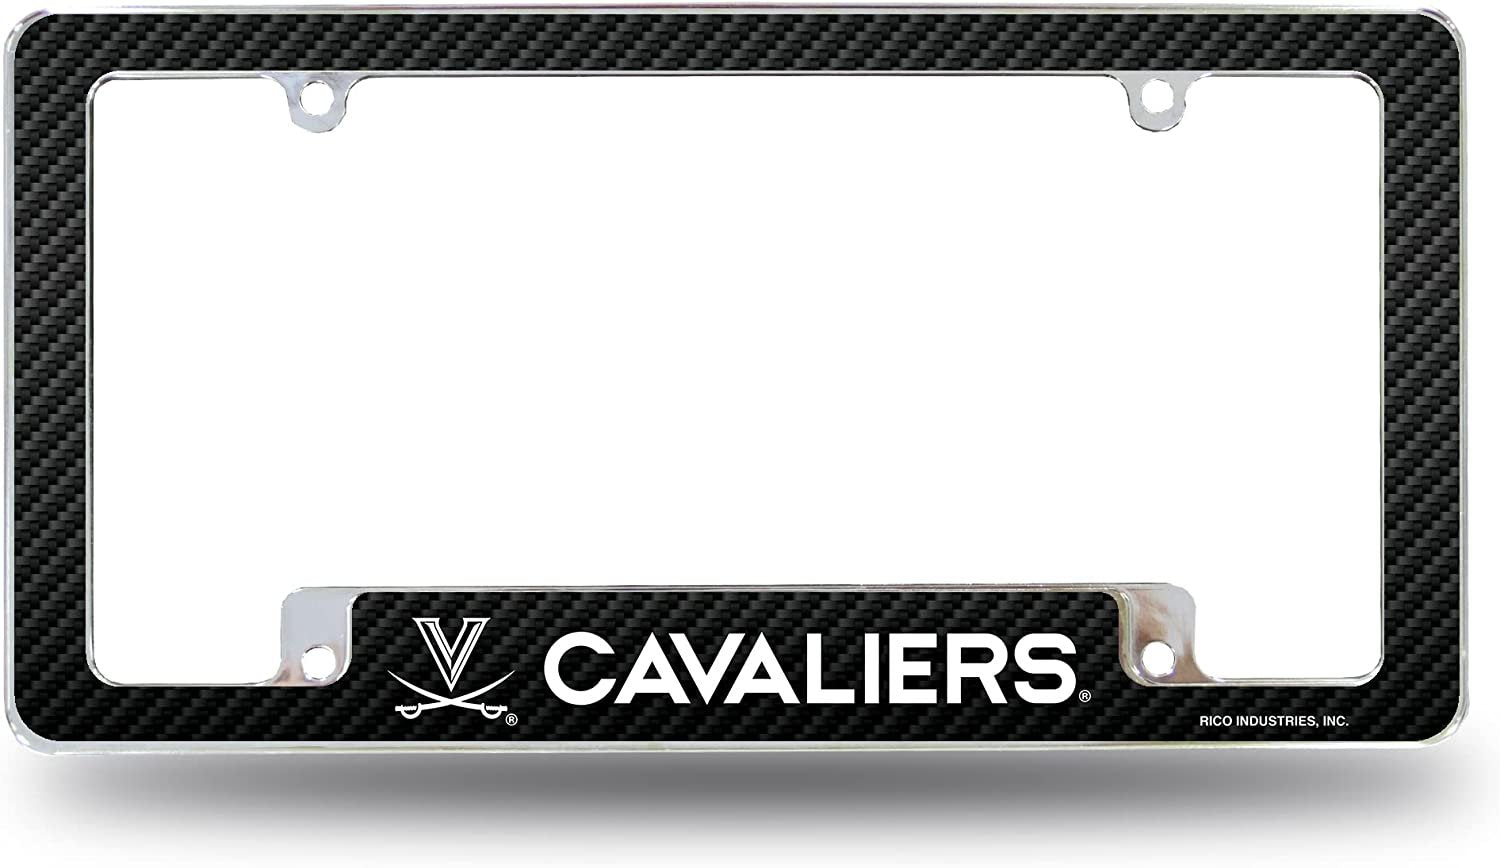 University of Virginia Cavaliers Metal License Plate Frame Chrome Tag Cover Carbon Fiber Design 6x12 Inch